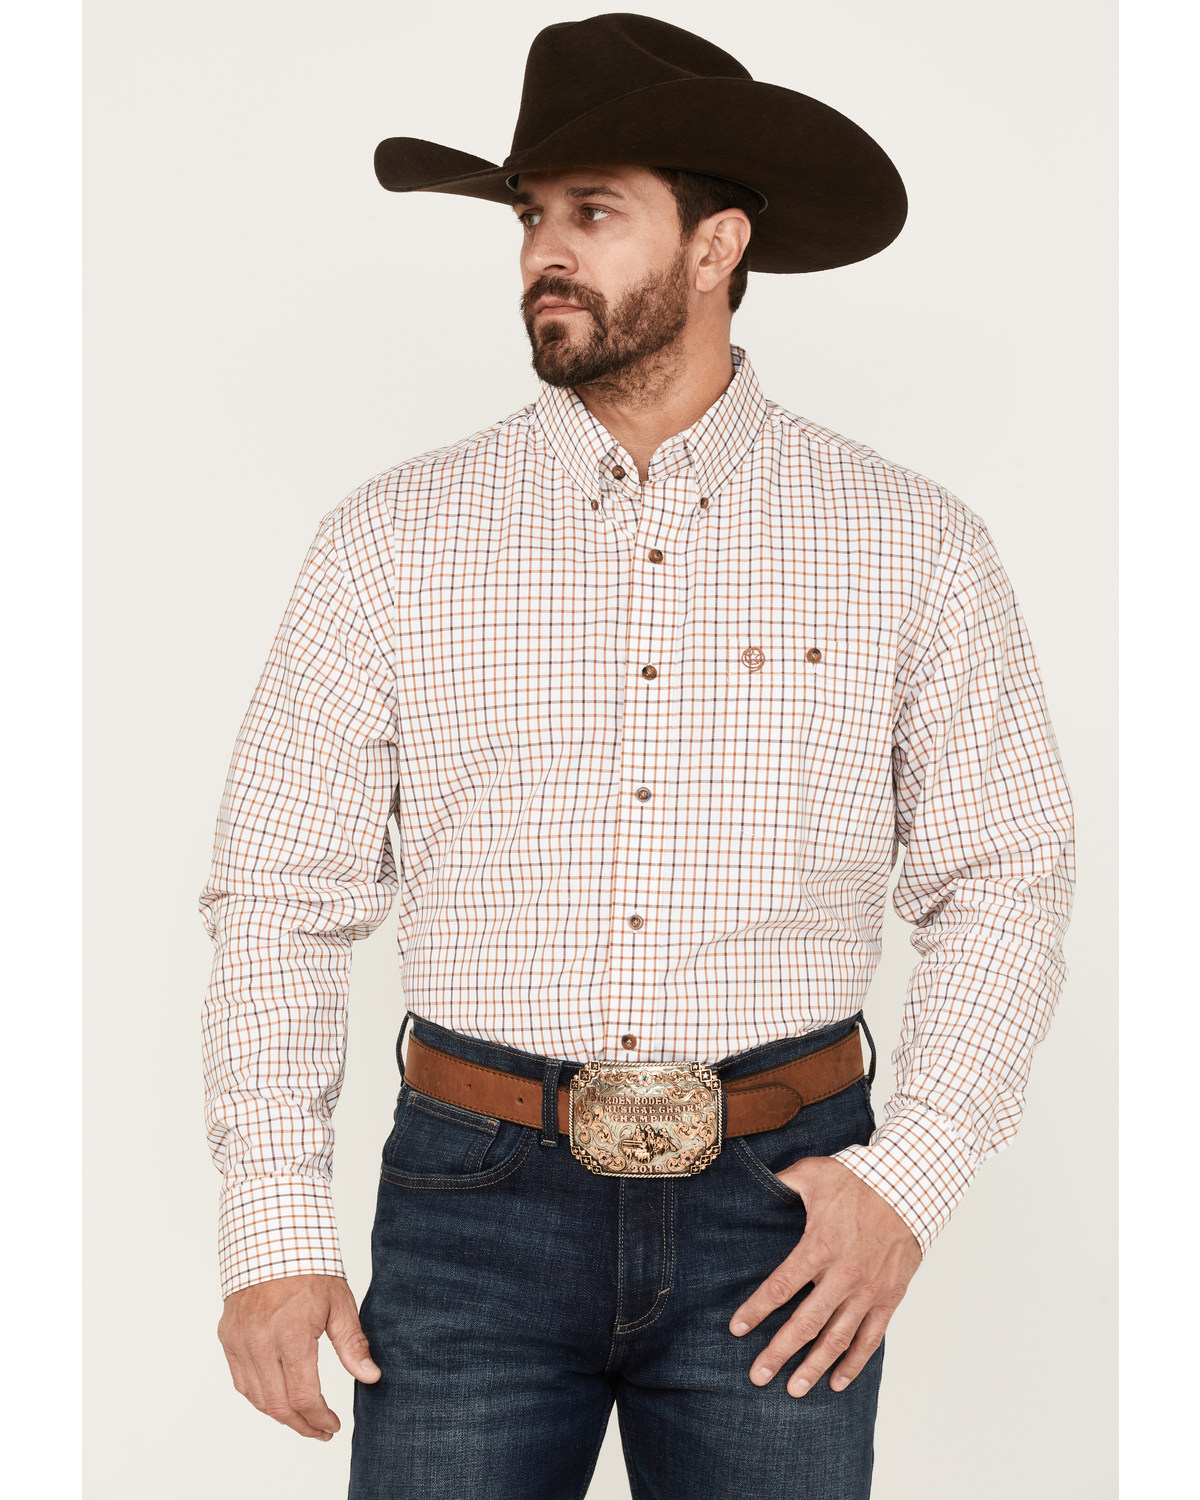 George Strait by Wrangler Men's Plaid Print Button Down Long Sleeve Western Shirt